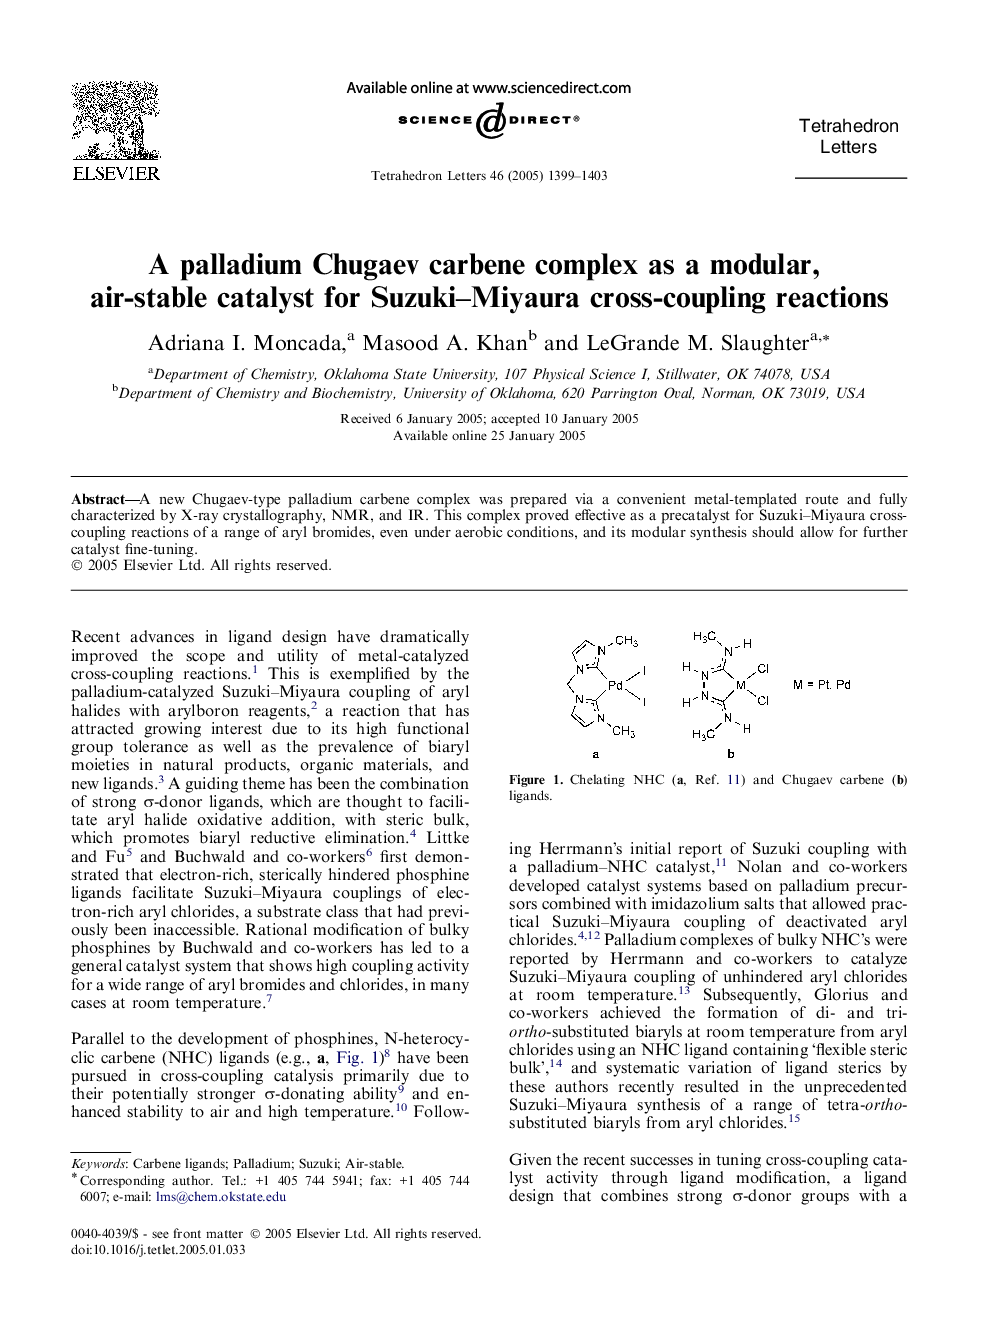 A palladium Chugaev carbene complex as a modular, air-stable catalyst for Suzuki-Miyaura cross-coupling reactions